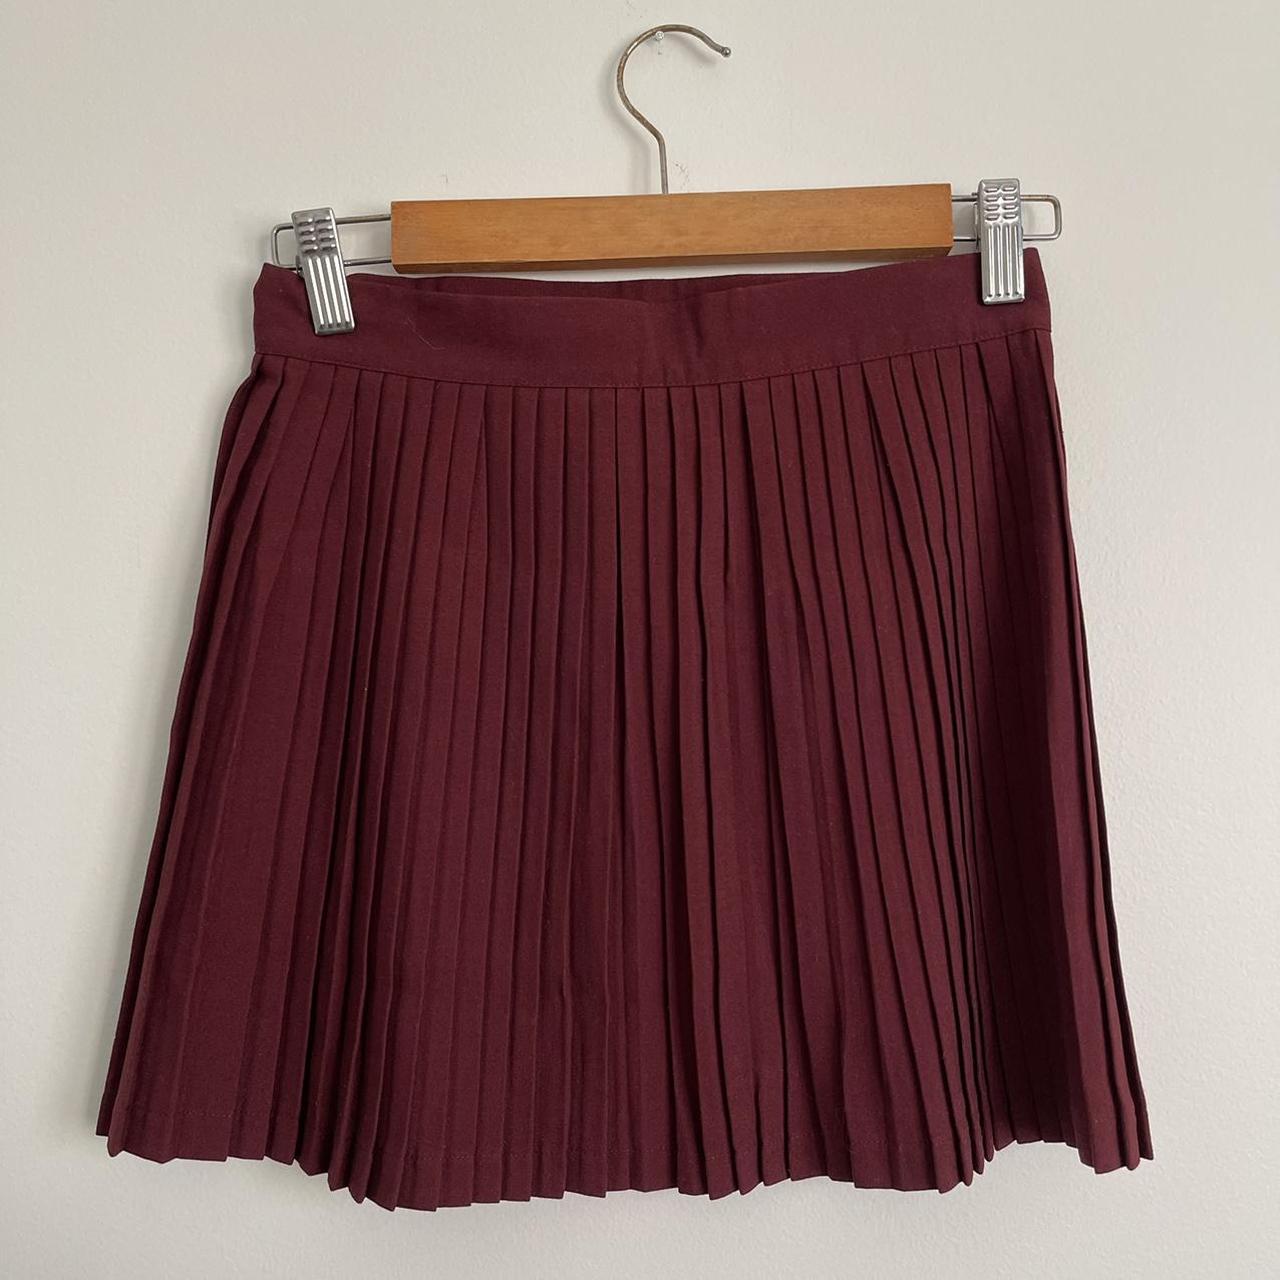 Maroon netball skirt • Size 12 (girls) can fit 4-... - Depop